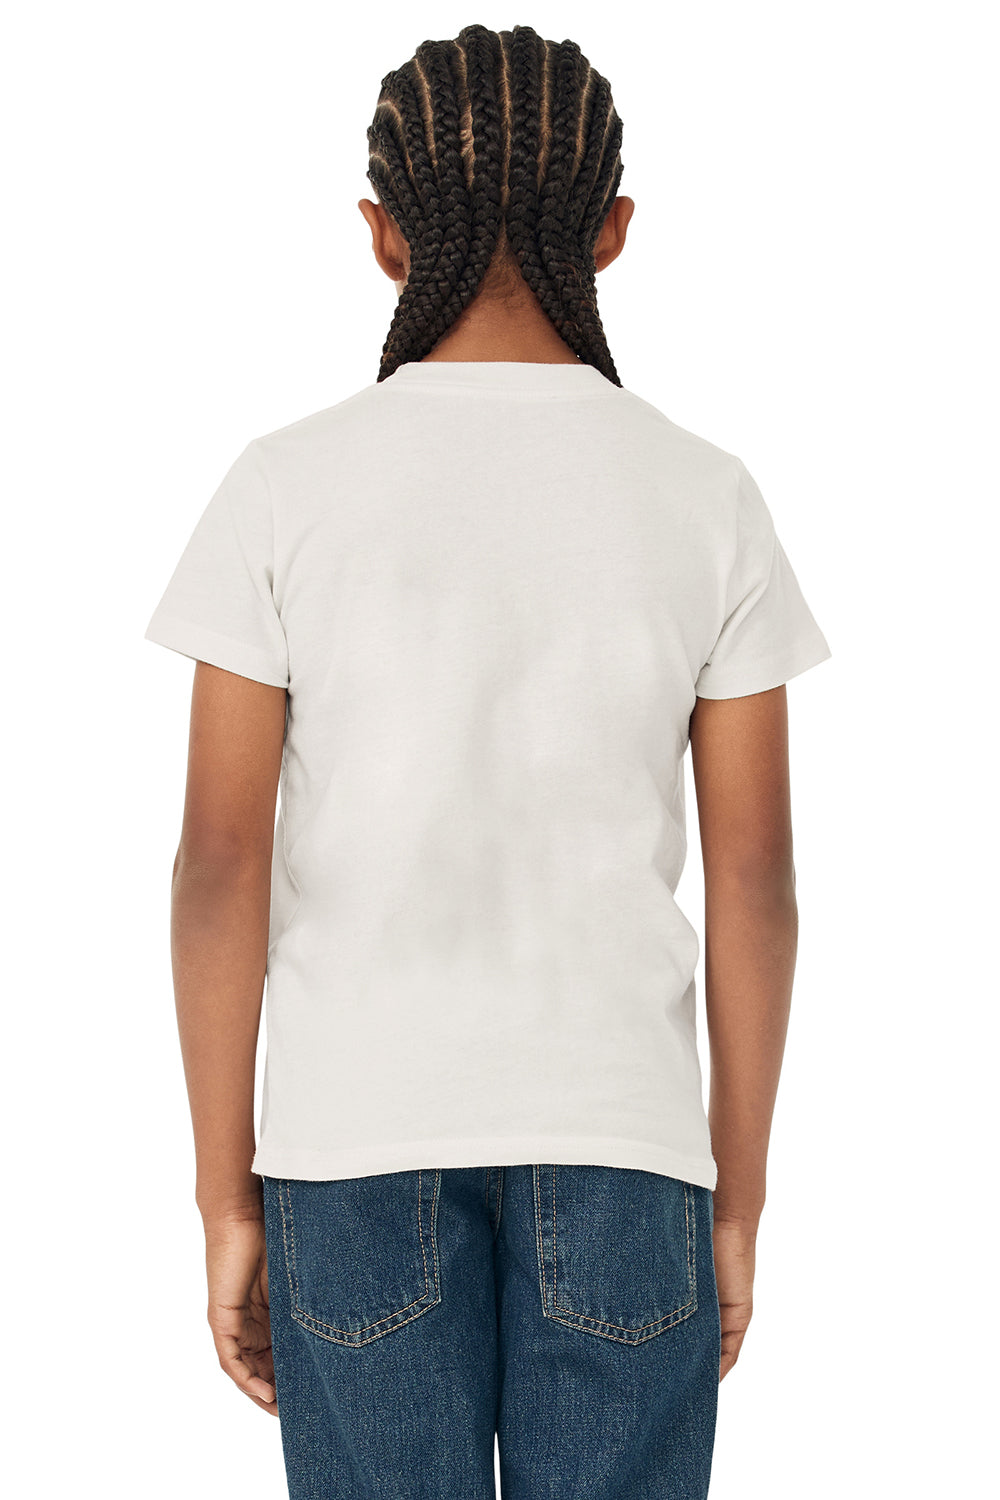 Bella + Canvas 3001Y Youth Jersey Short Sleeve Crewneck T-Shirt Vintage White Model Back